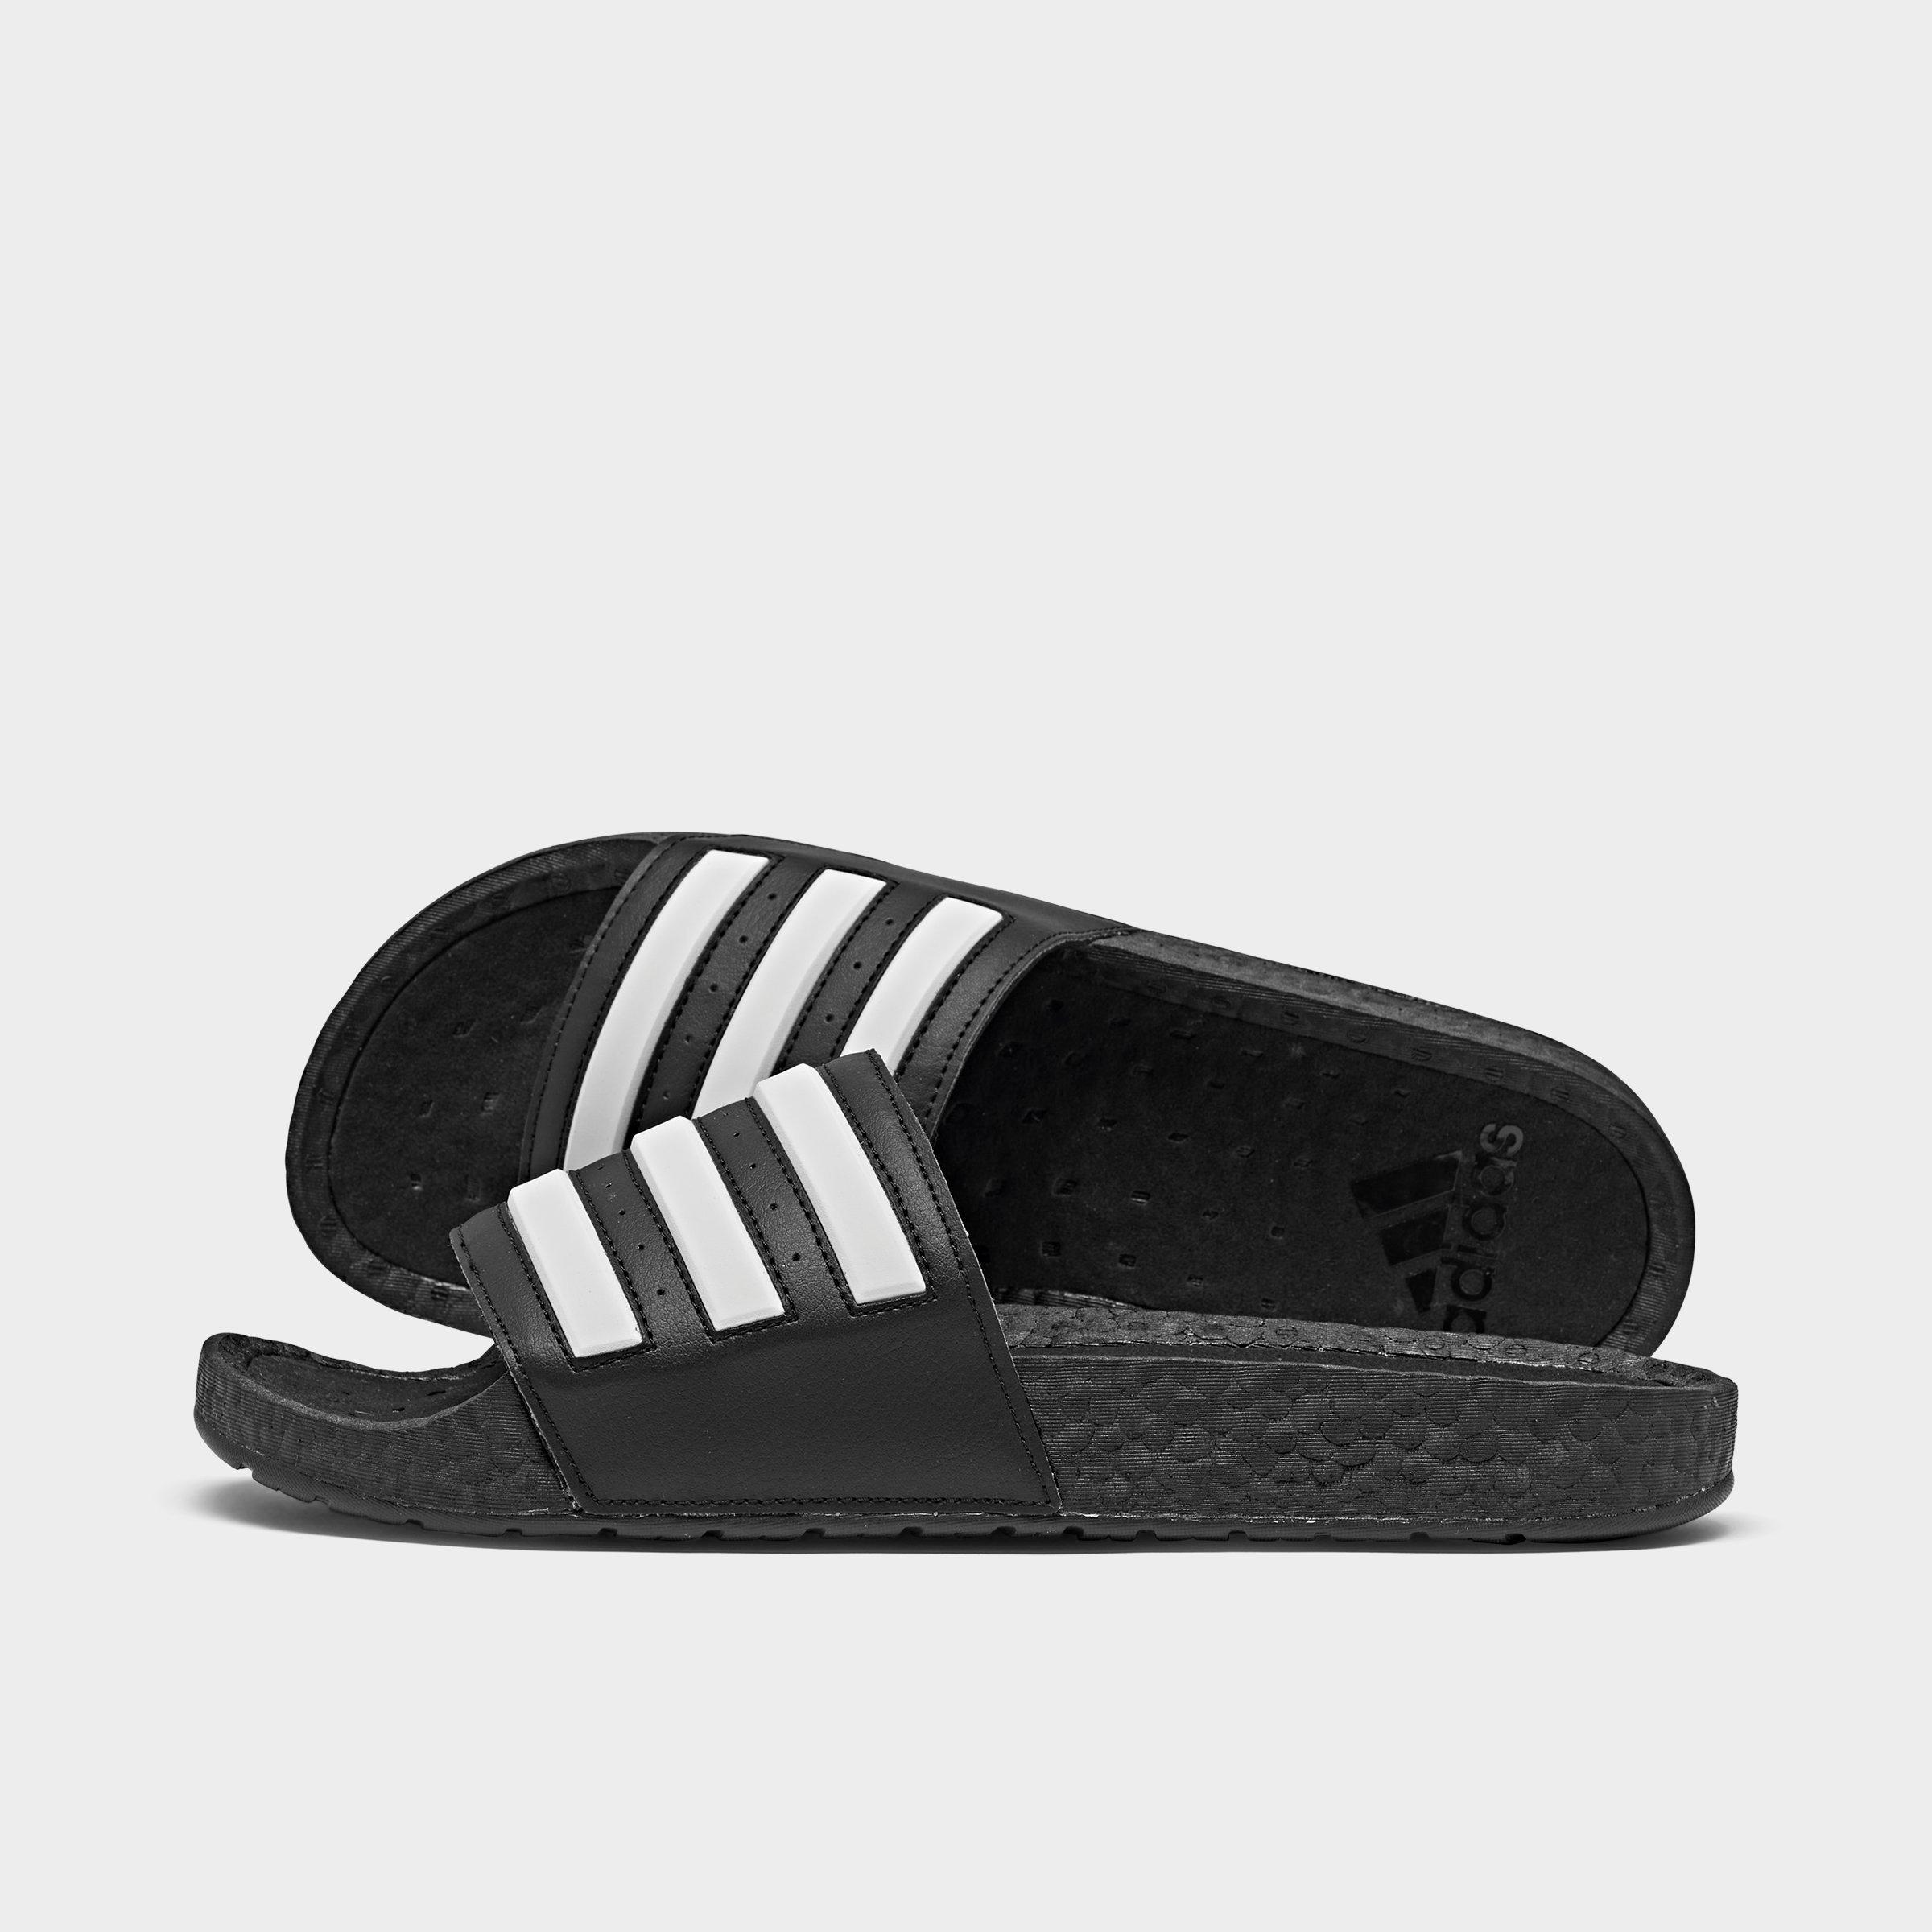 slide sandals adidas